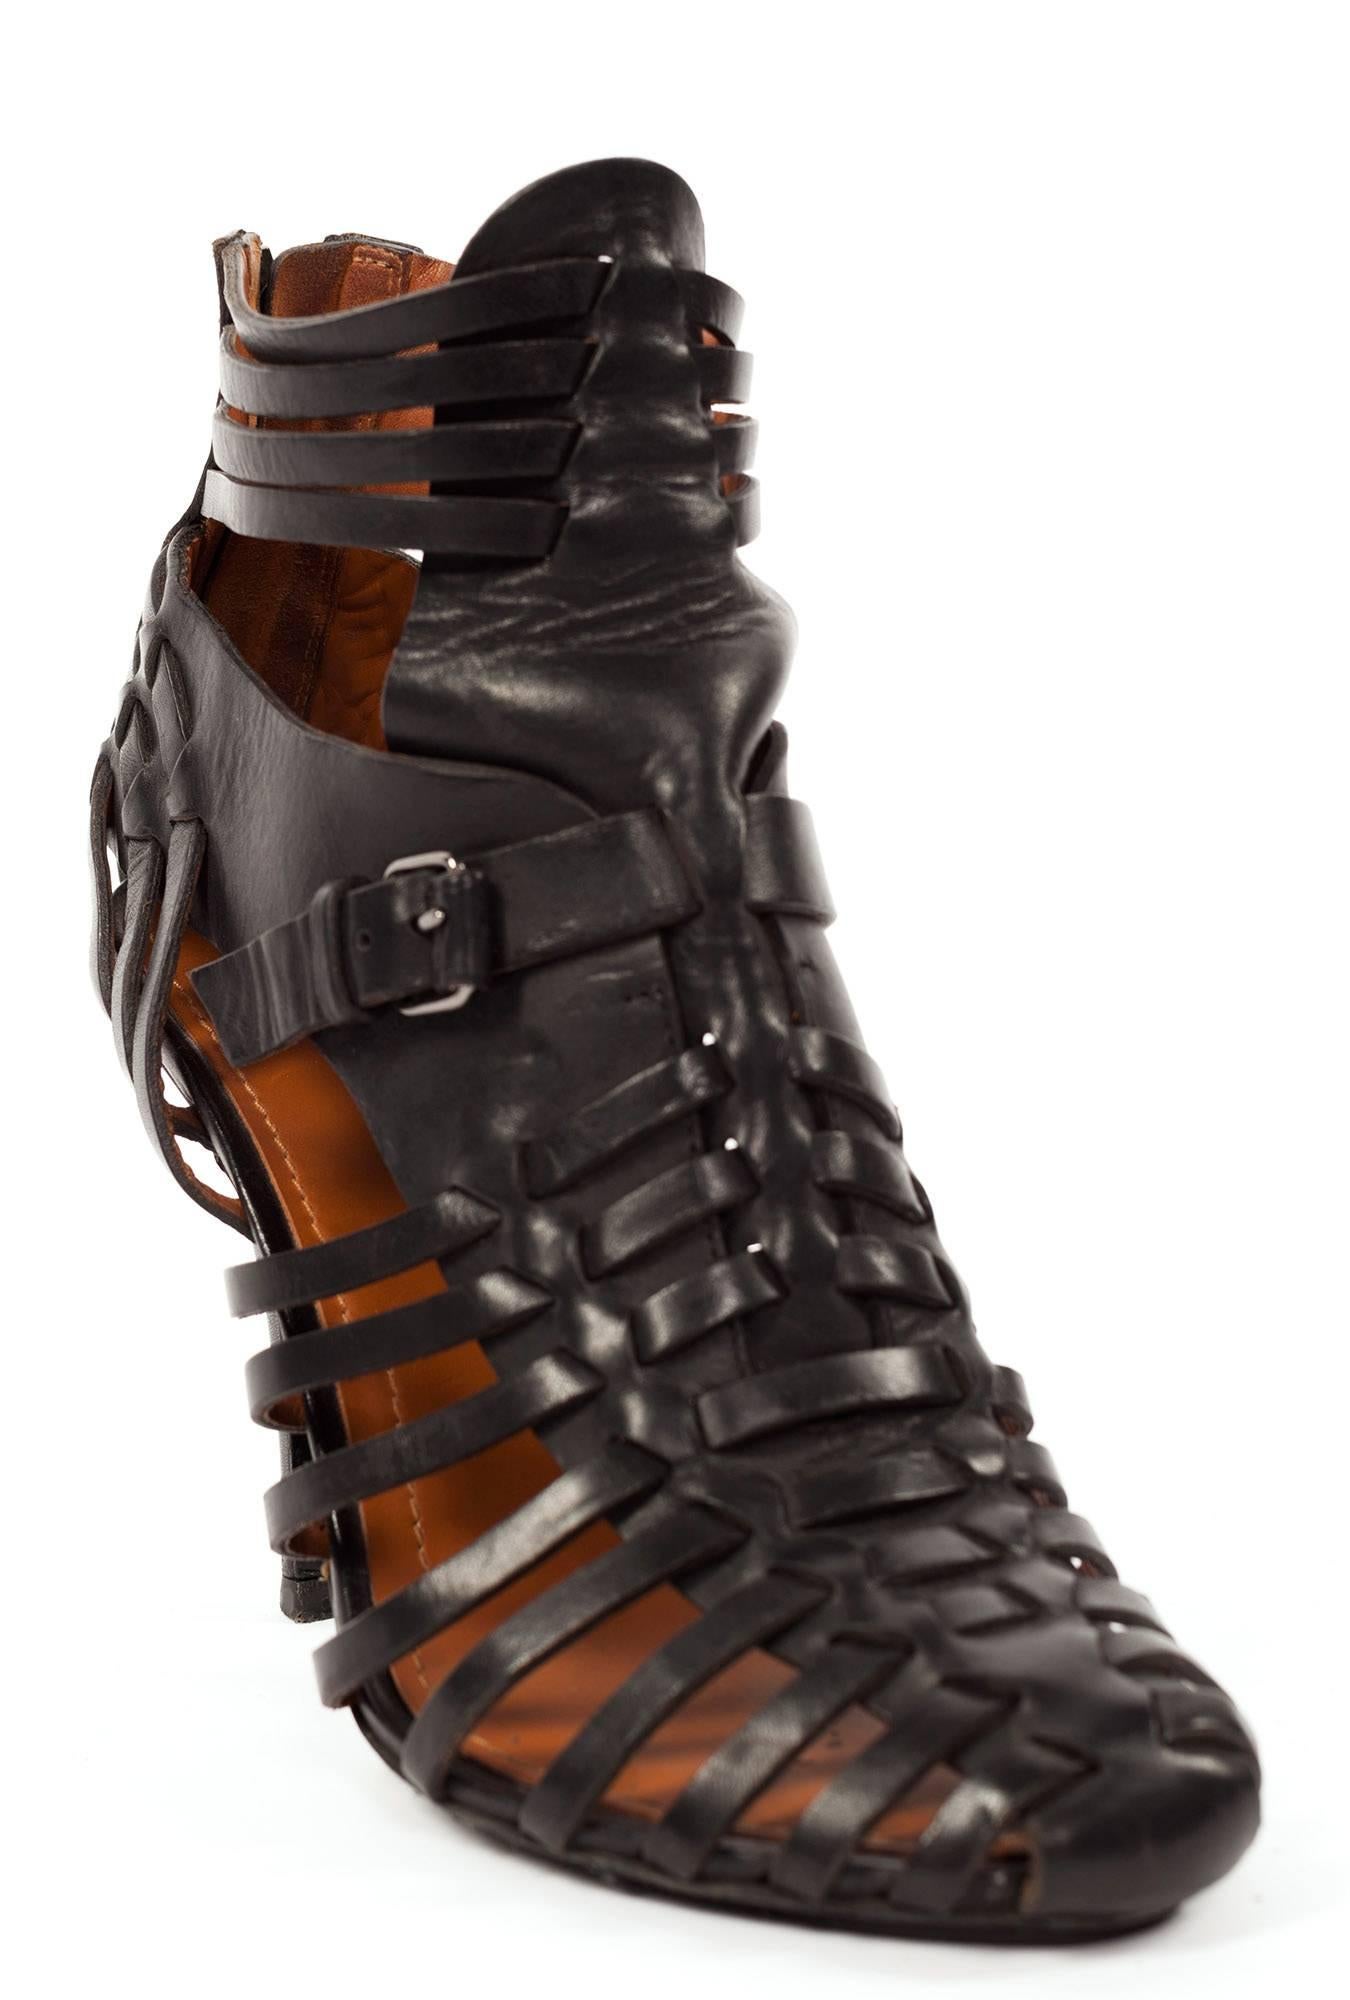 Givenchy by Ricardo Tisci leather strap gladiator heels, Sz. 8.5 1